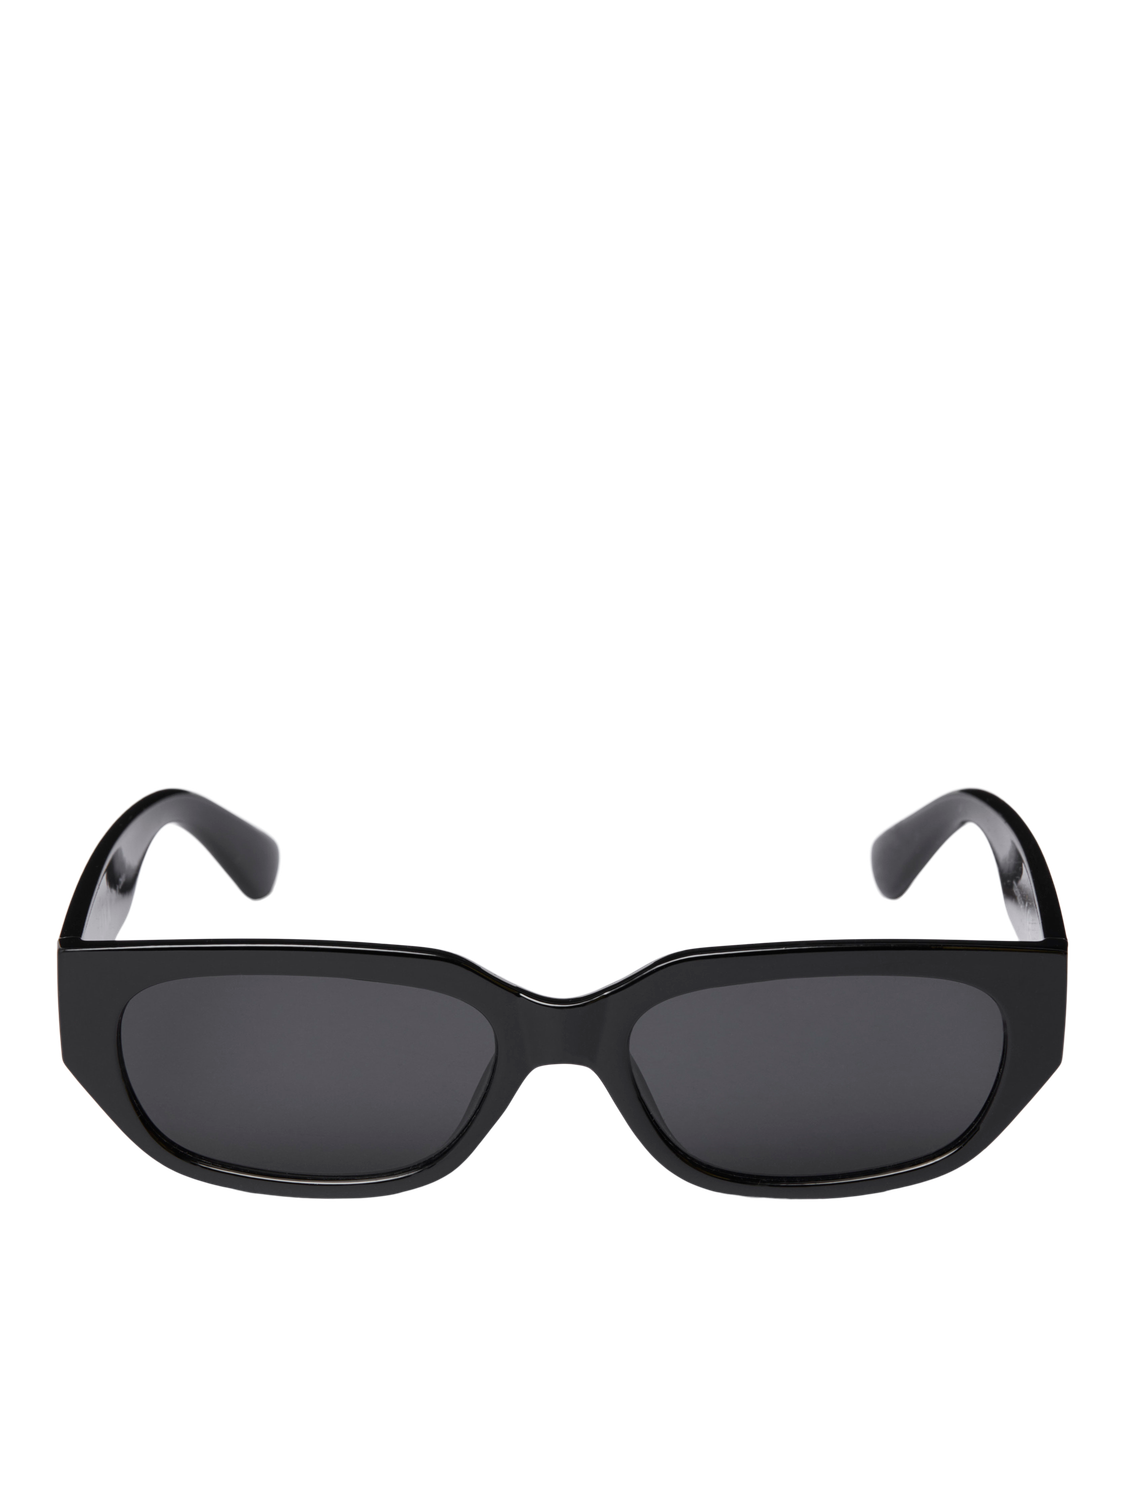 JJXX JXKANSAS Sunglasses -Black - 12251632